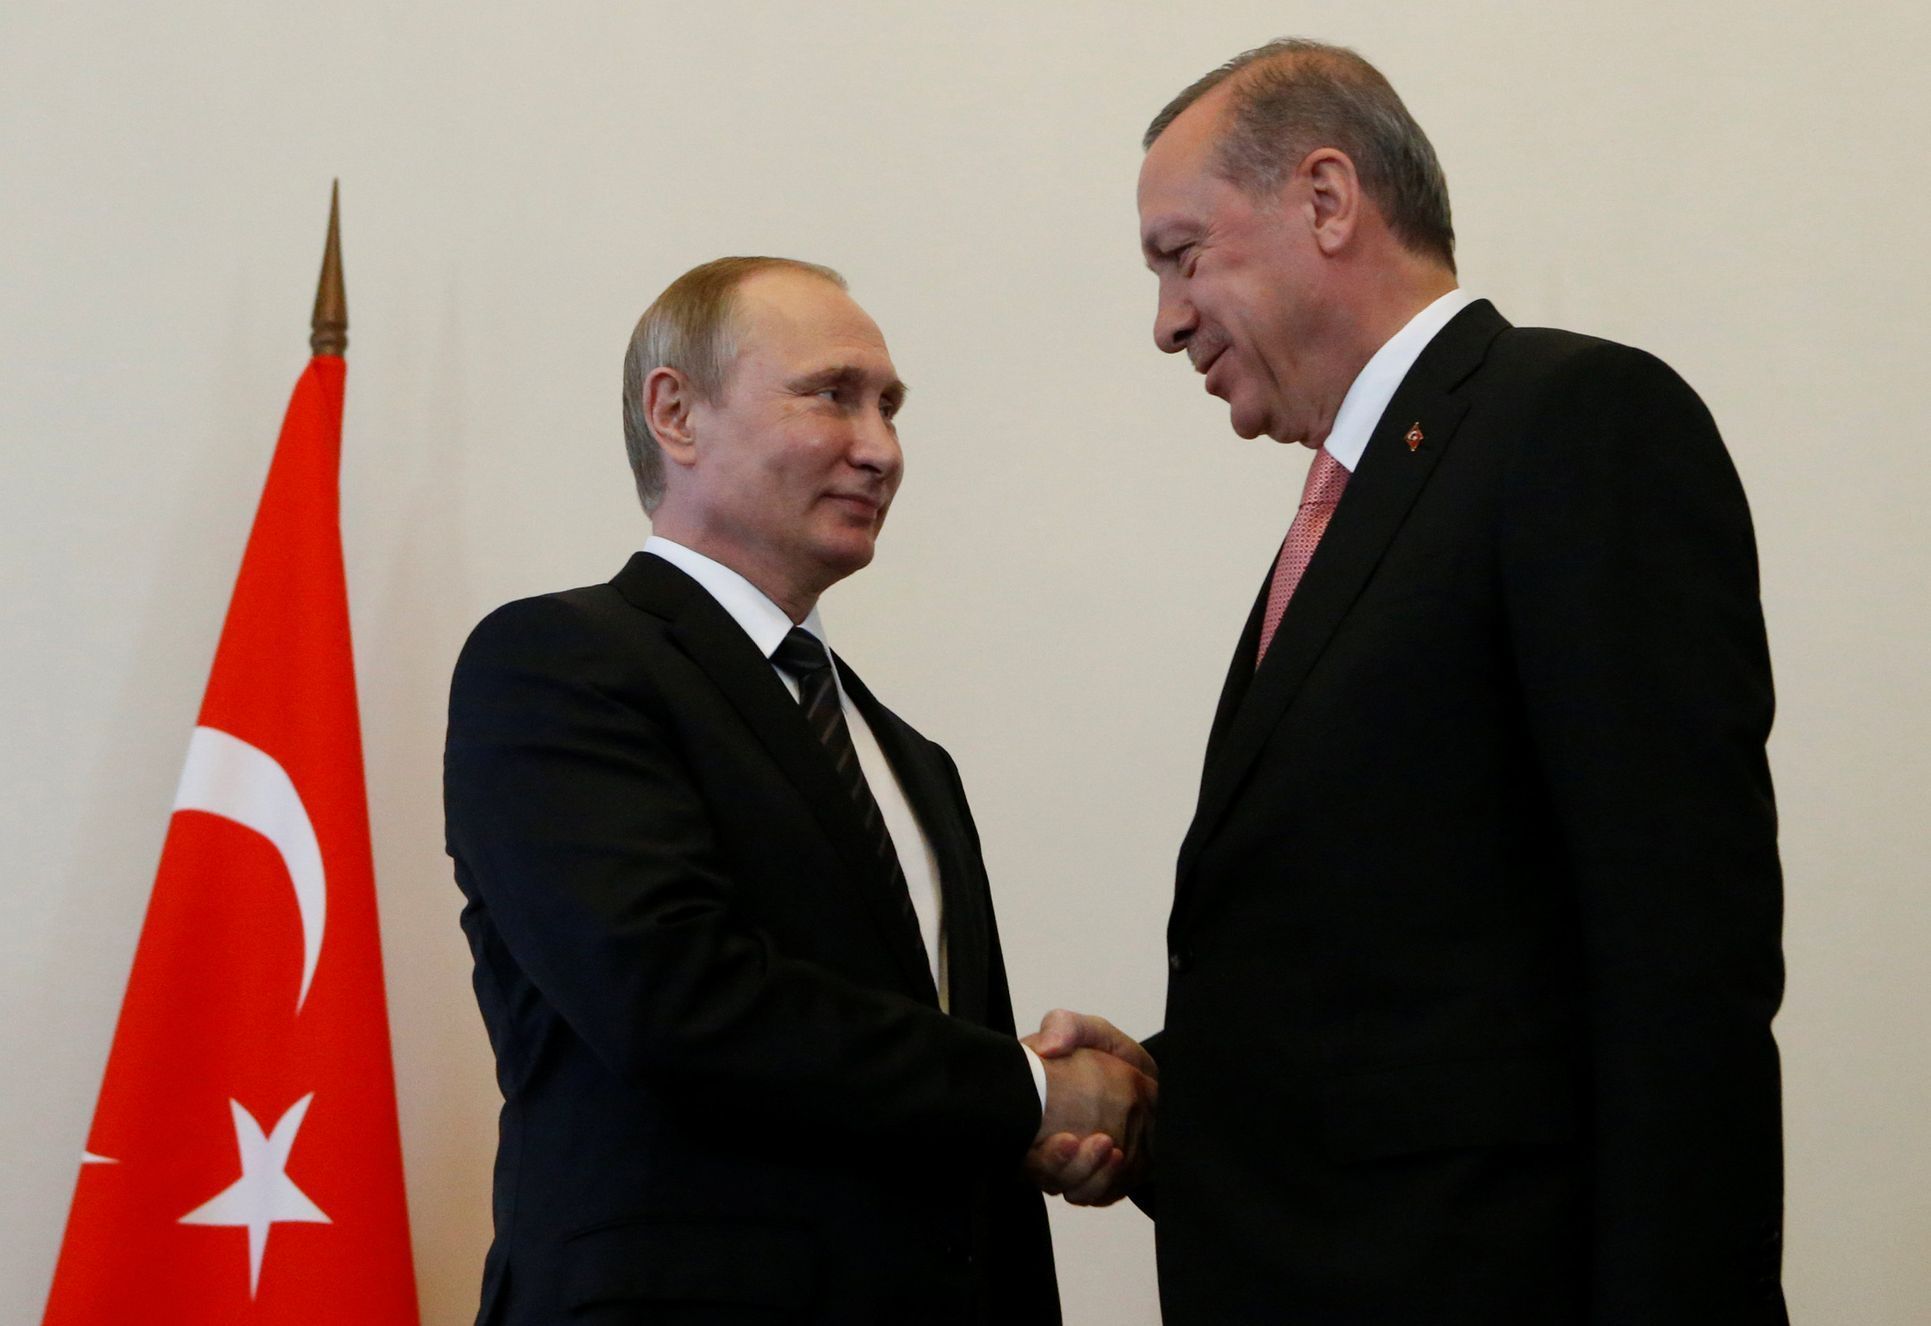 Russian President Putin shakes hands with Turkish President Erdogan during their meeting in St. Petersburg